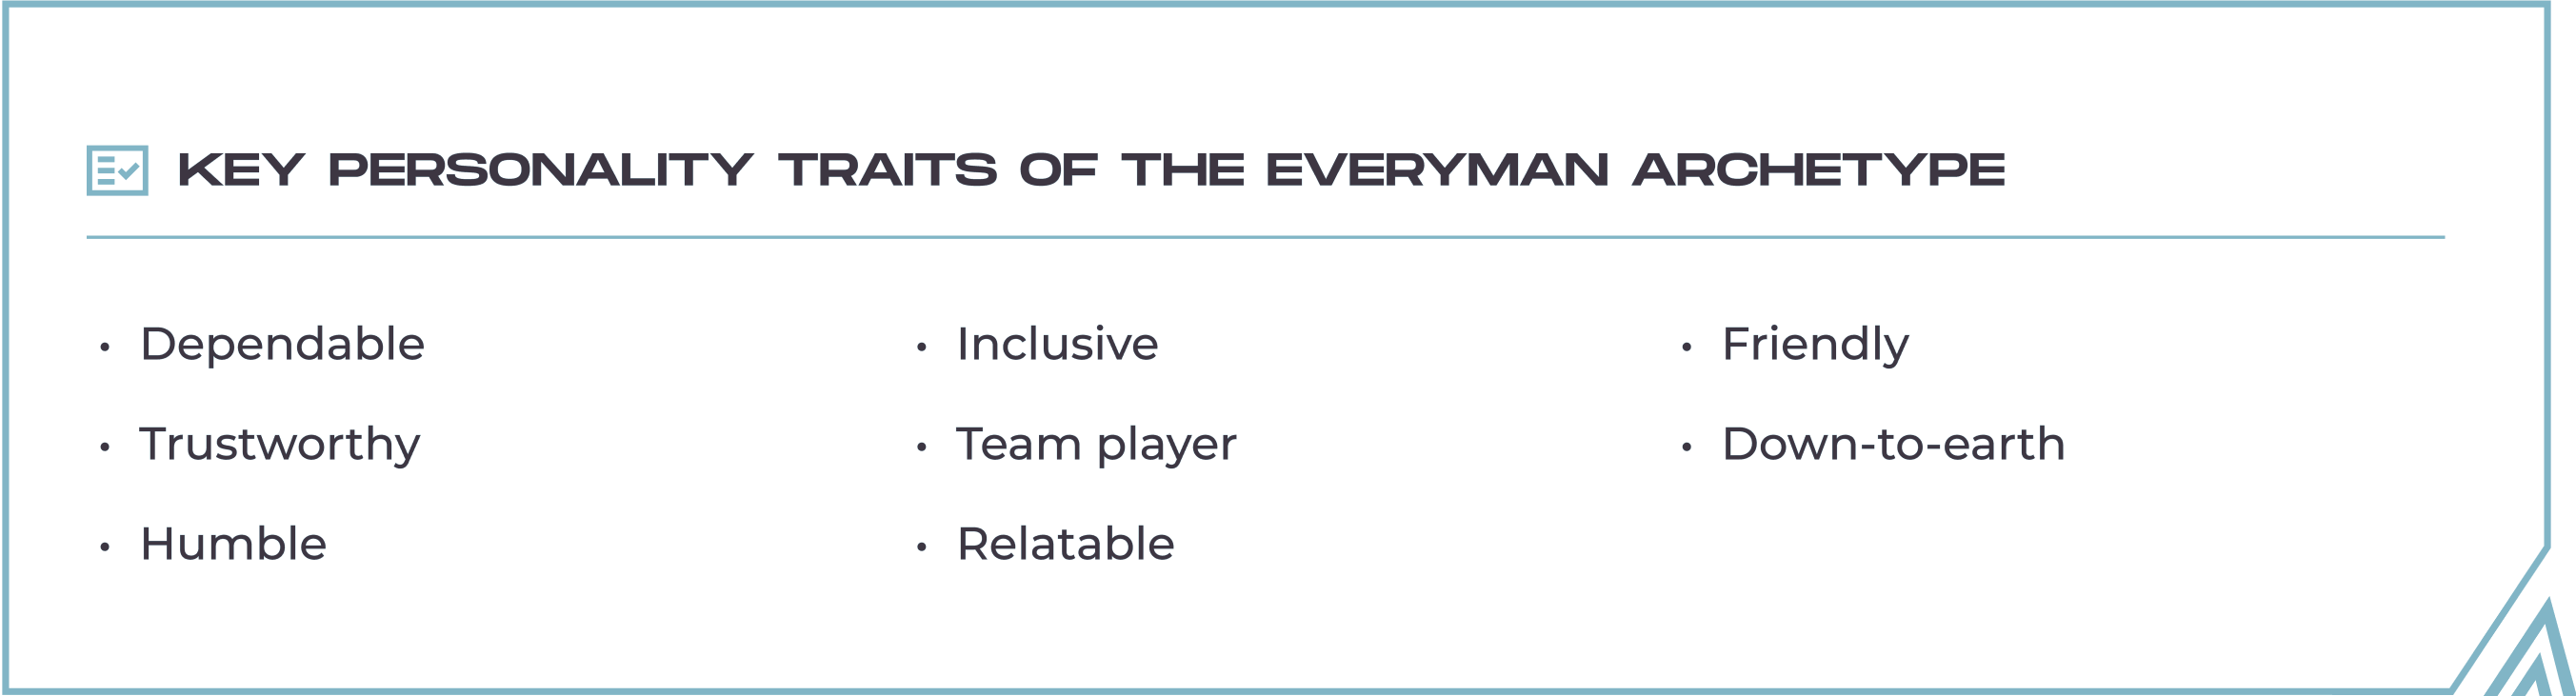 Key Personality Traits of The Everyman